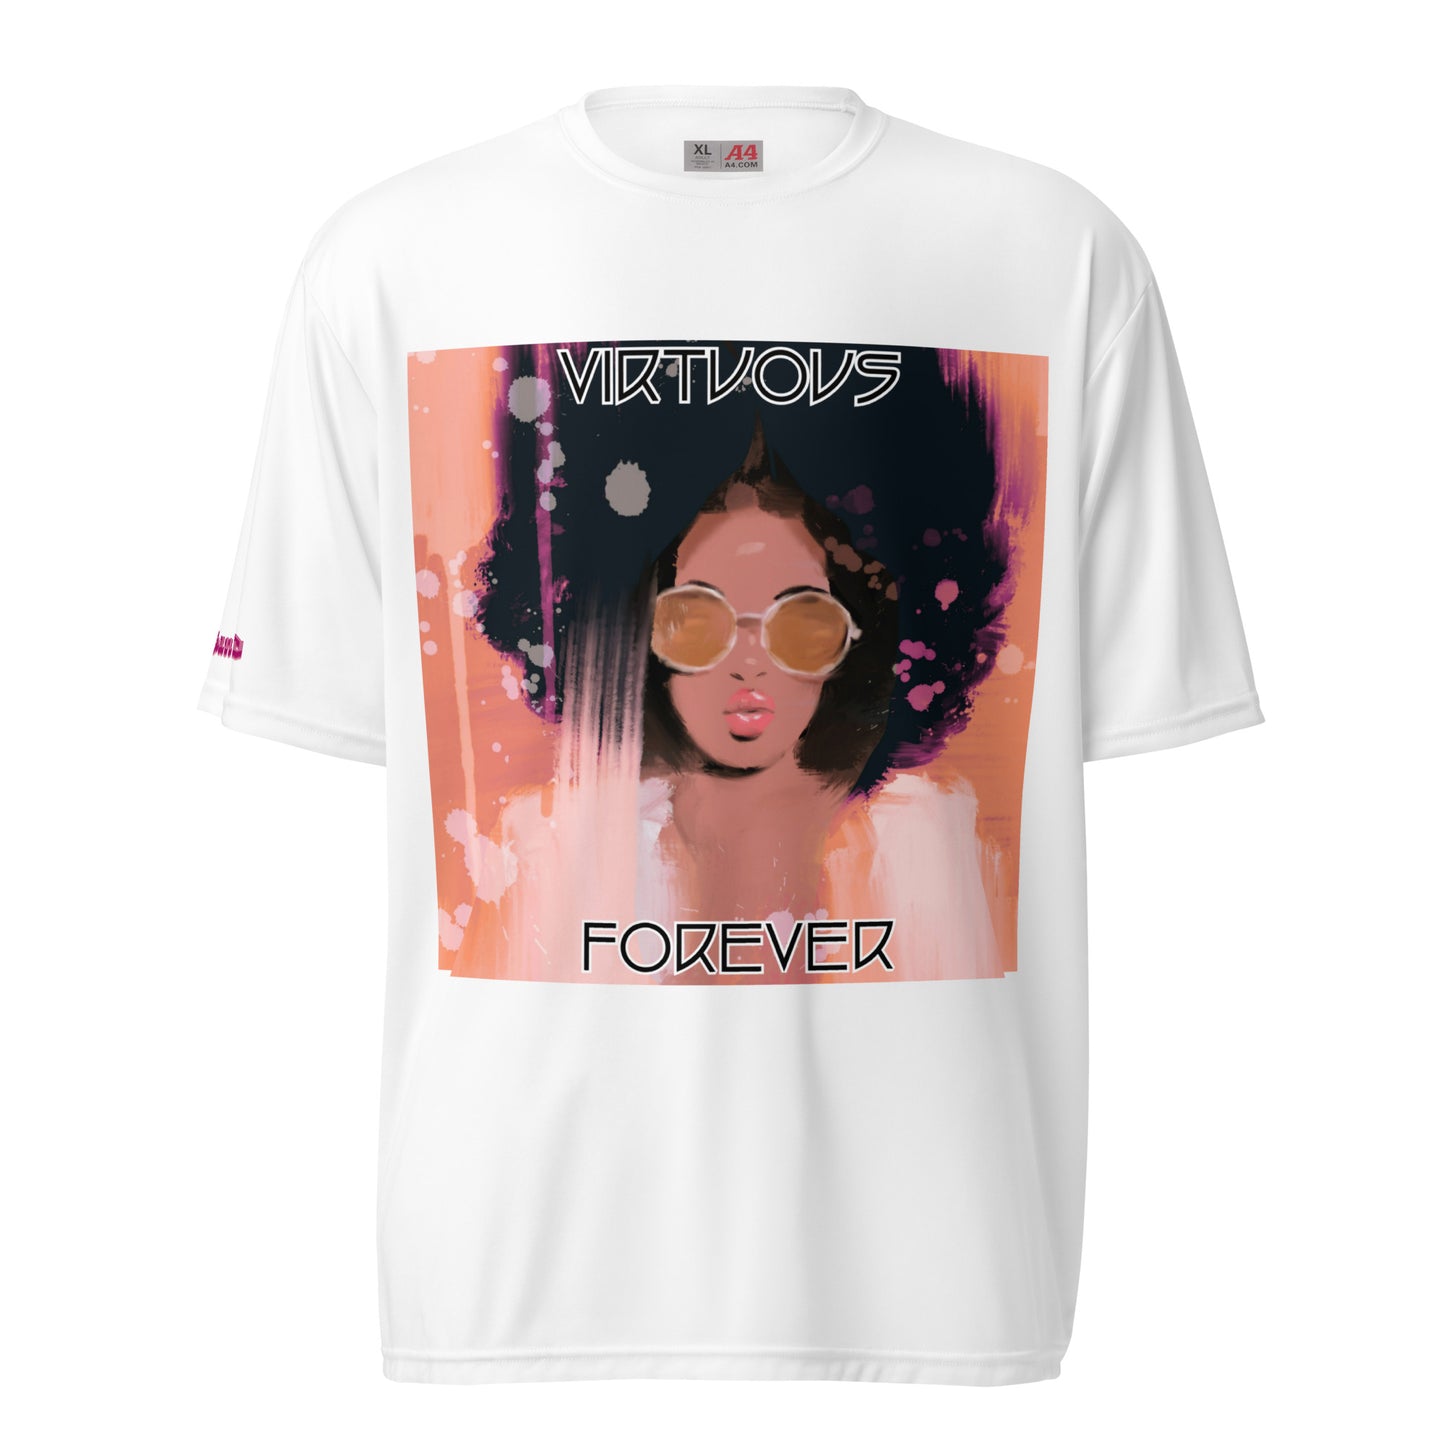 Virtuous Forever- Unisex performance crew neck t-shirt